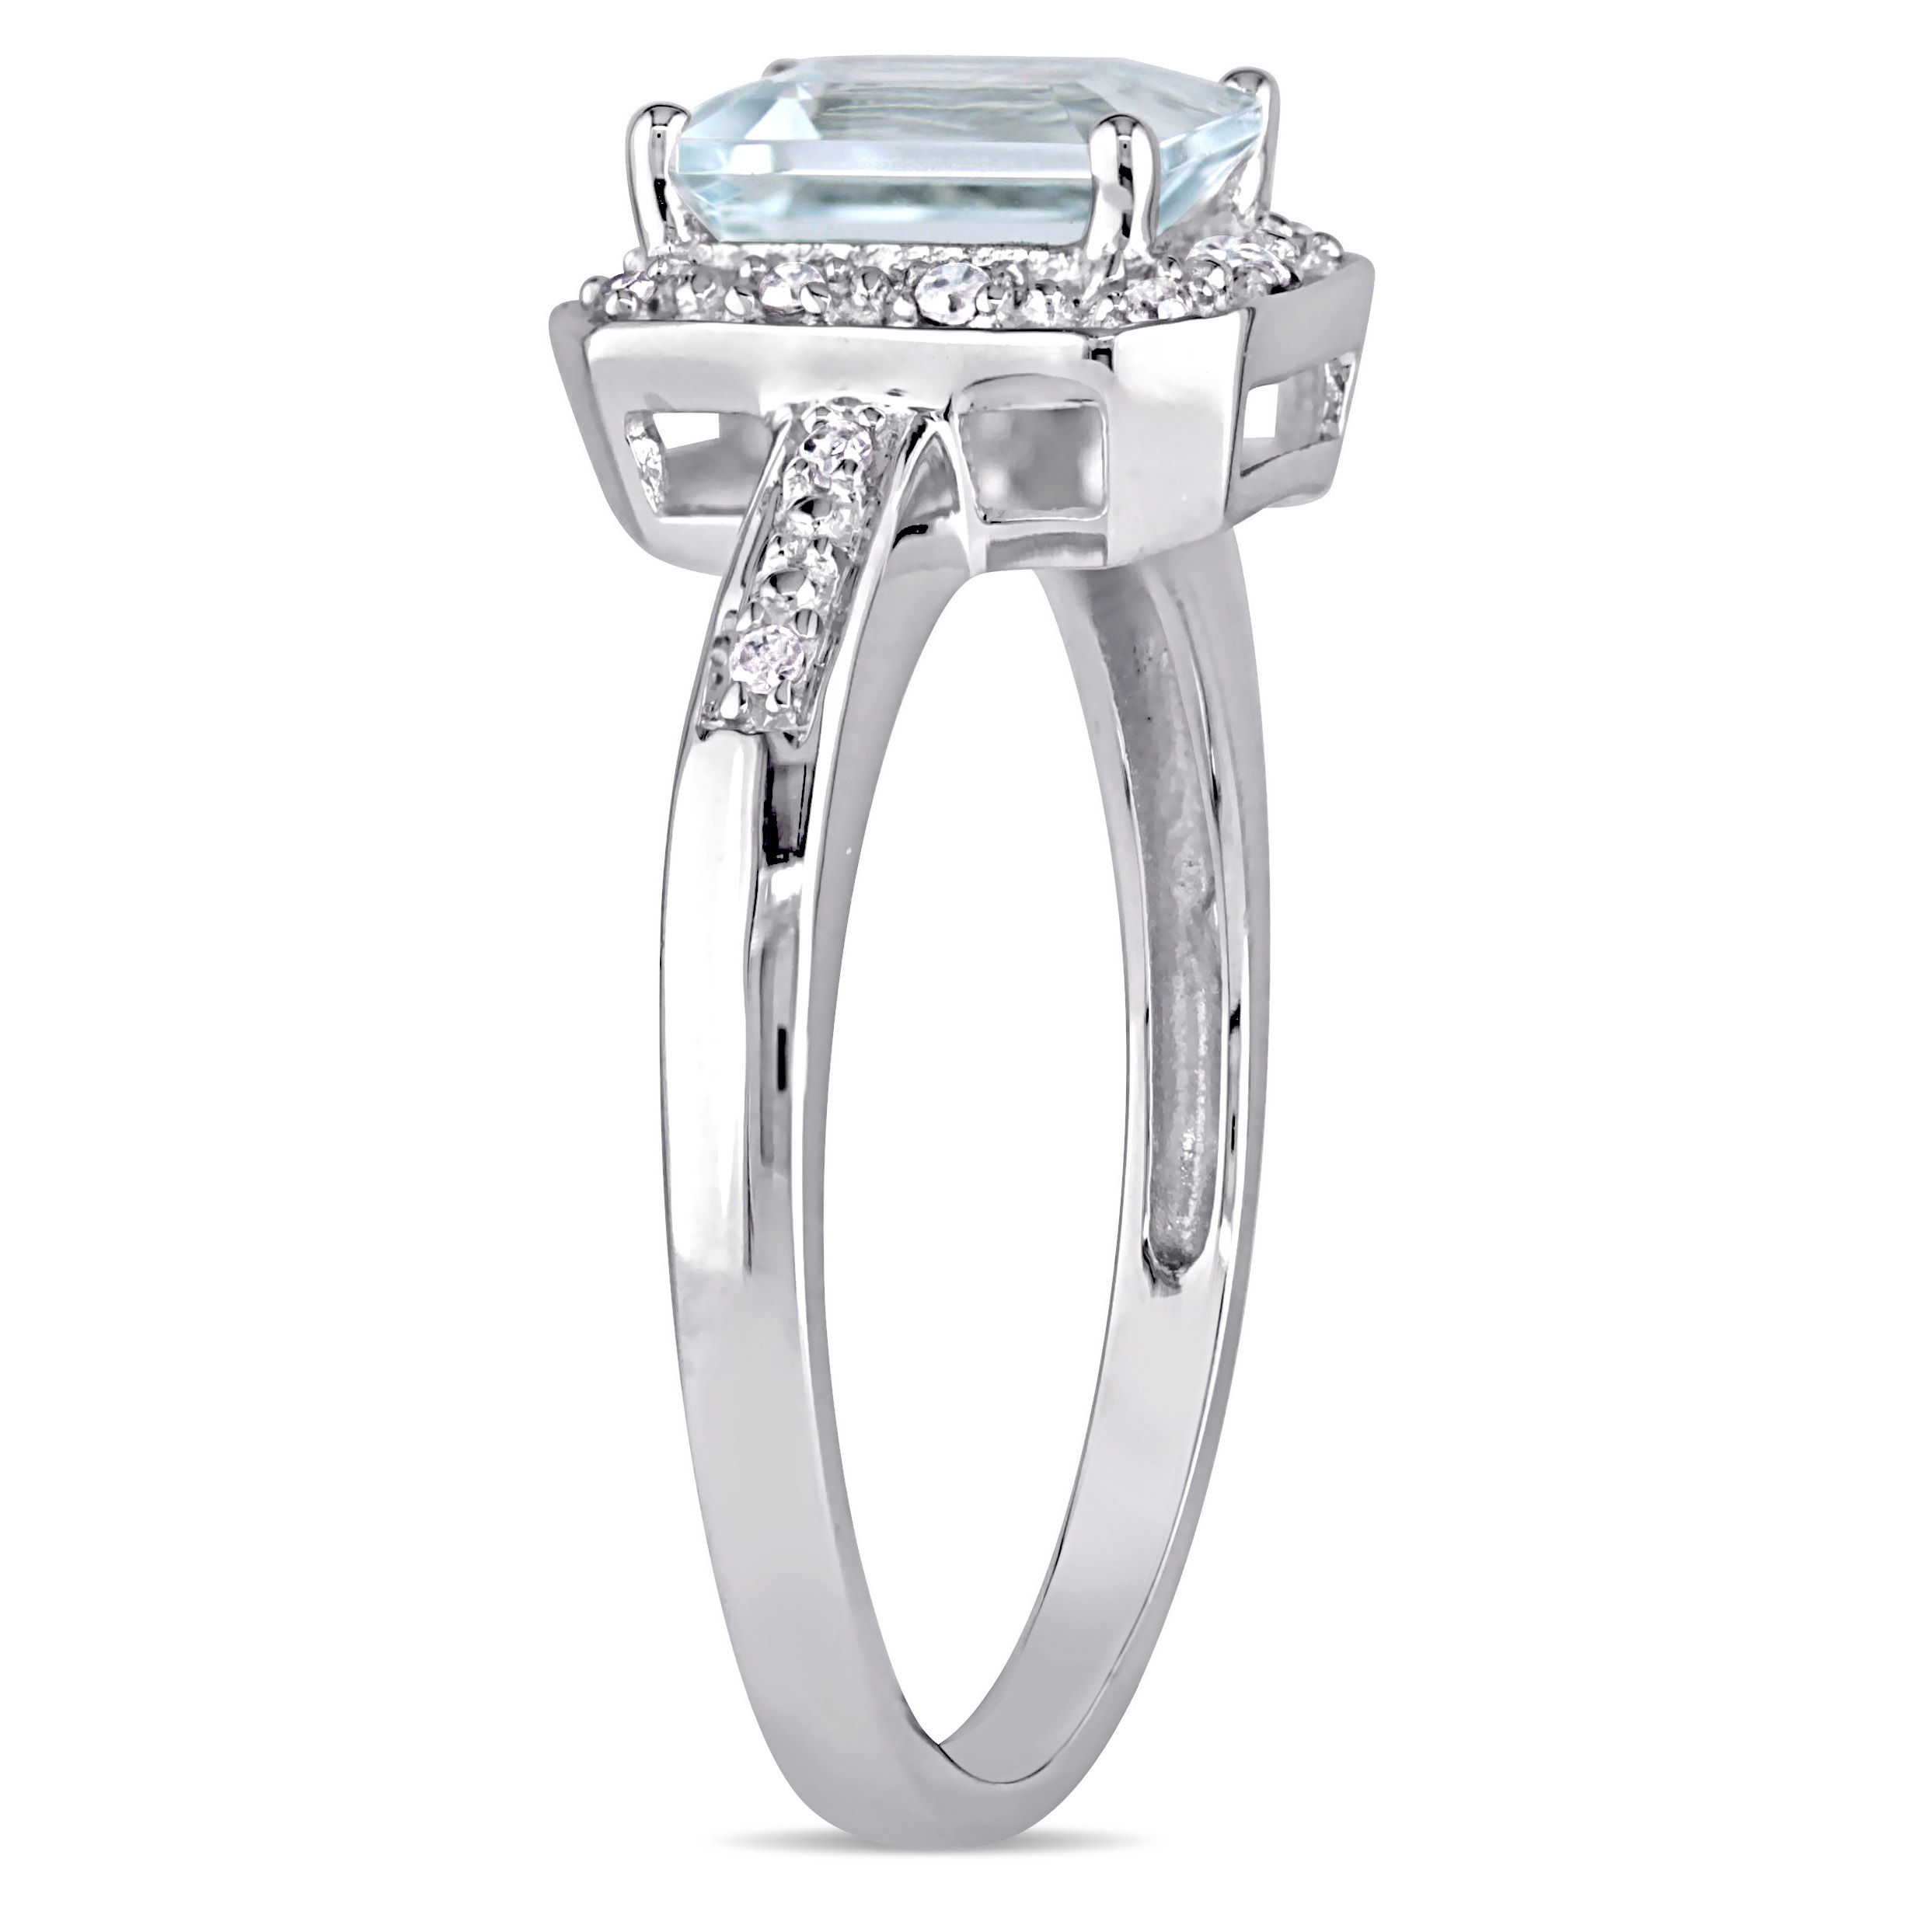 Emerald Cut Aquamarine Ring with Diamonds in 10k White Gold